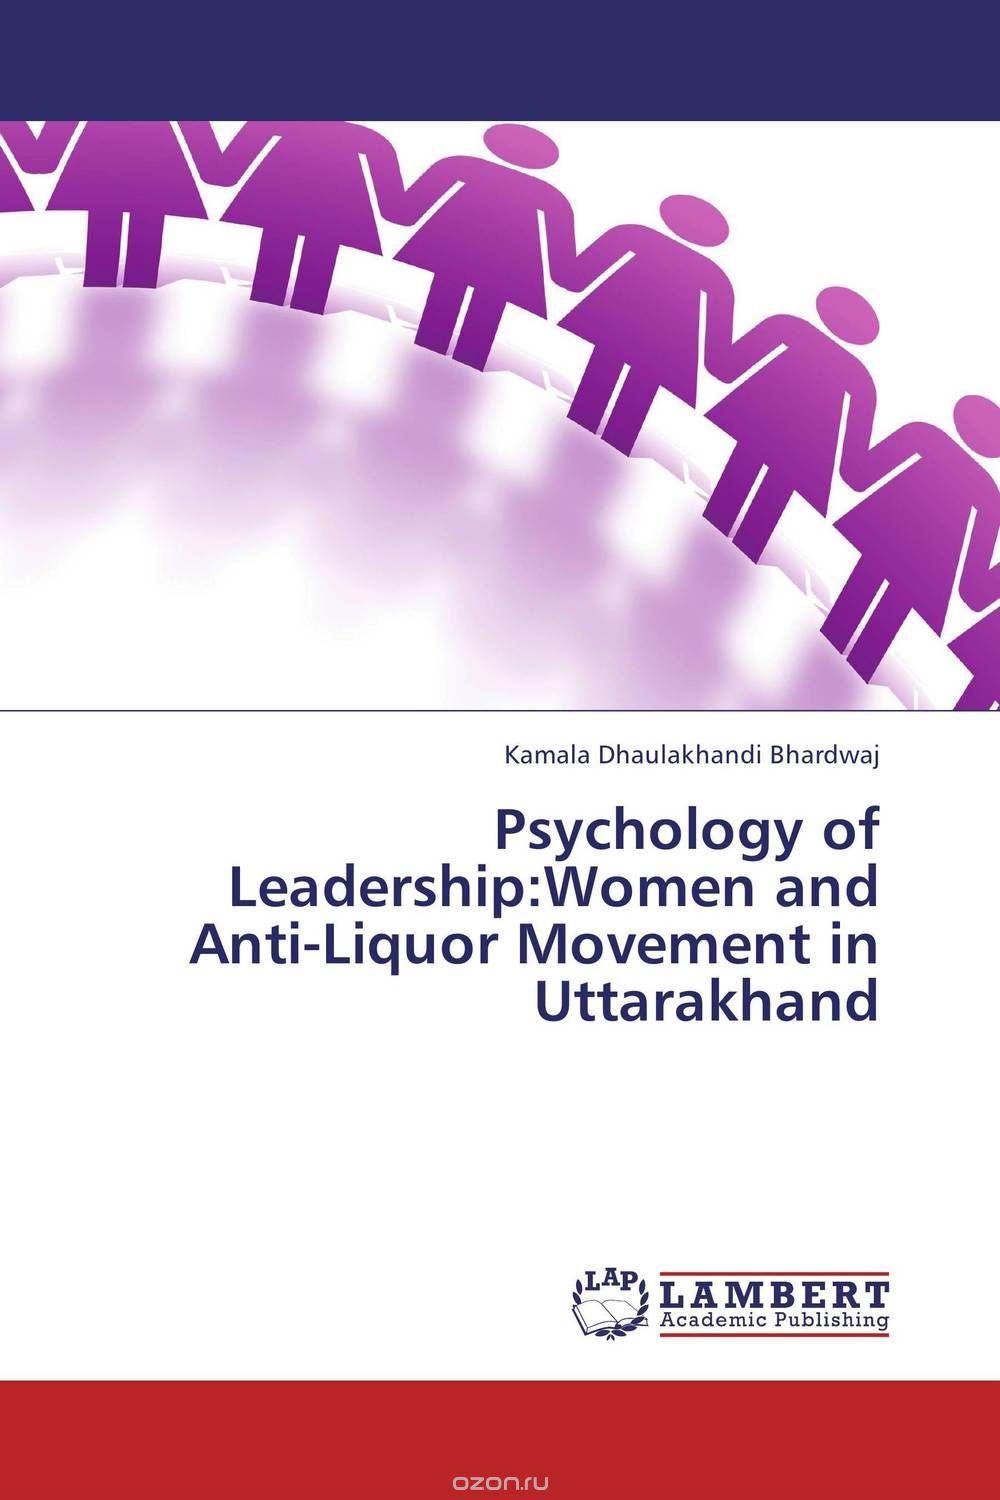 Psychology of Leadership:Women and Anti-Liquor Movement in Uttarakhand